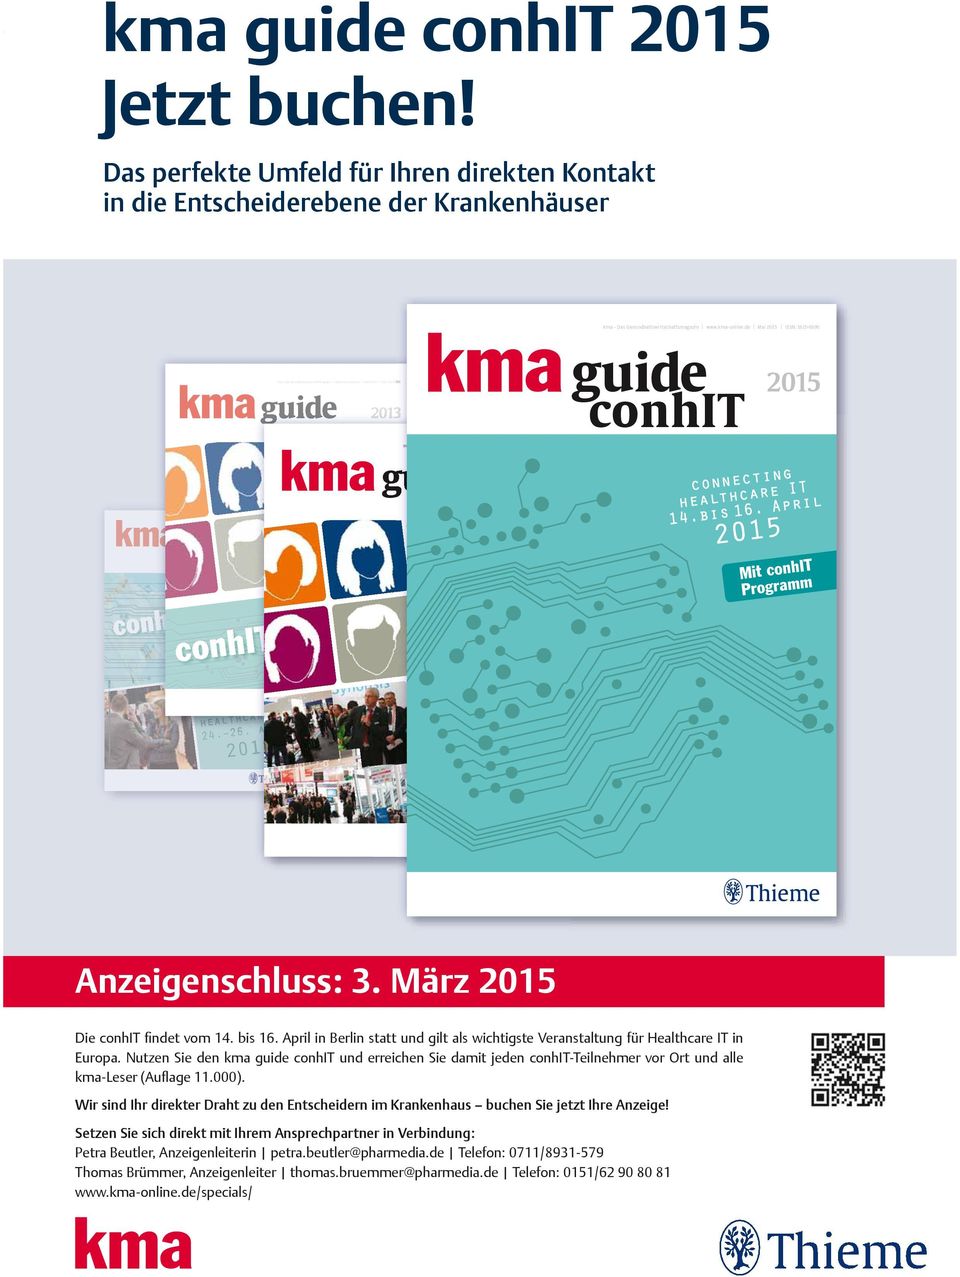 kma-online.de Mai 2015 ISSN: 1615-8695 guide conhit connecting healthcare IT 14.bis 16. April 2015 2015 Mit conhit Programm 24. 26. 201 Anzeigenschluss: 3. März 2015 14.